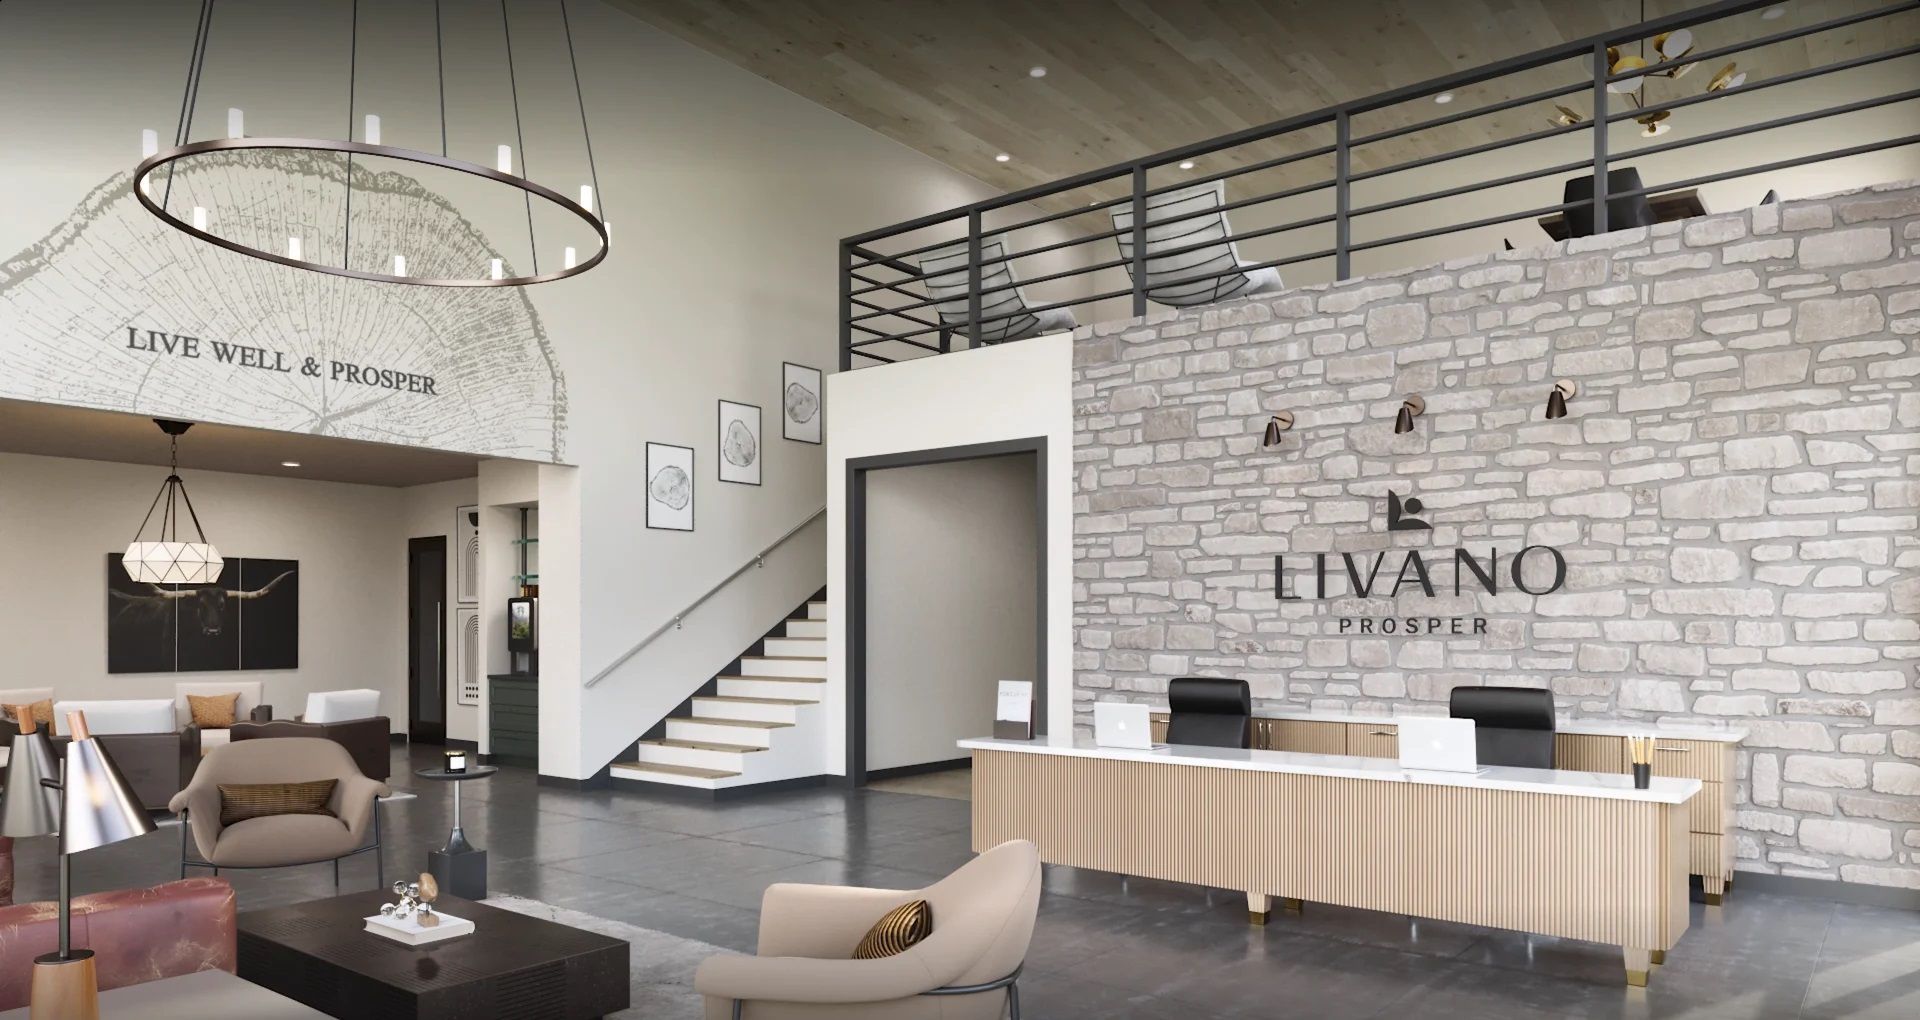 A living room with a brick wall and a reception desk at Livano Prosper.